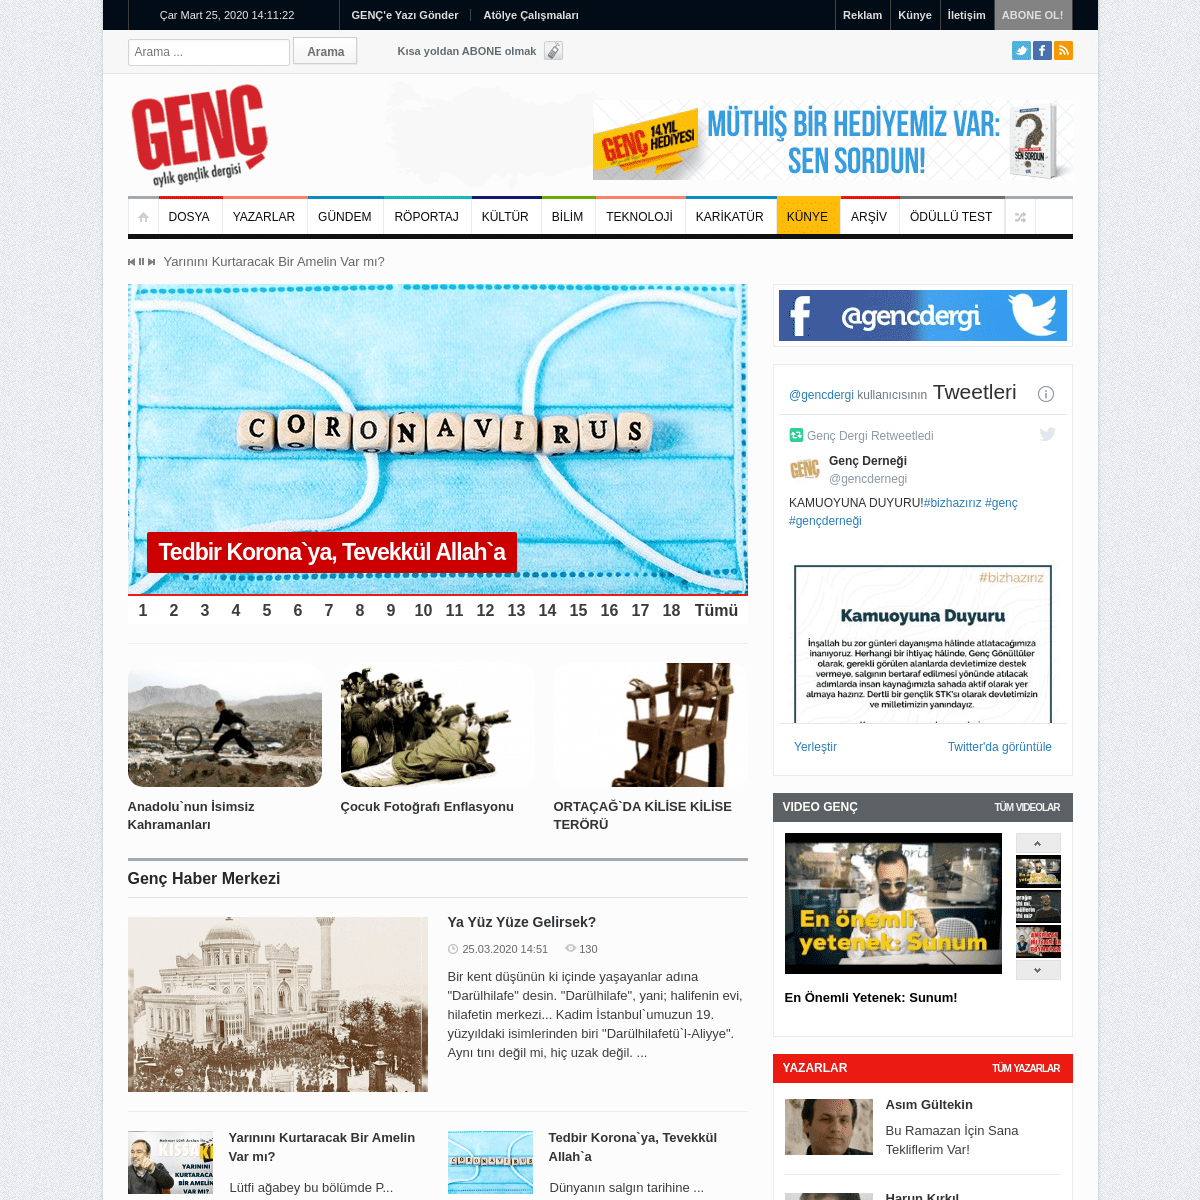 A complete backup of gencdergisi.com